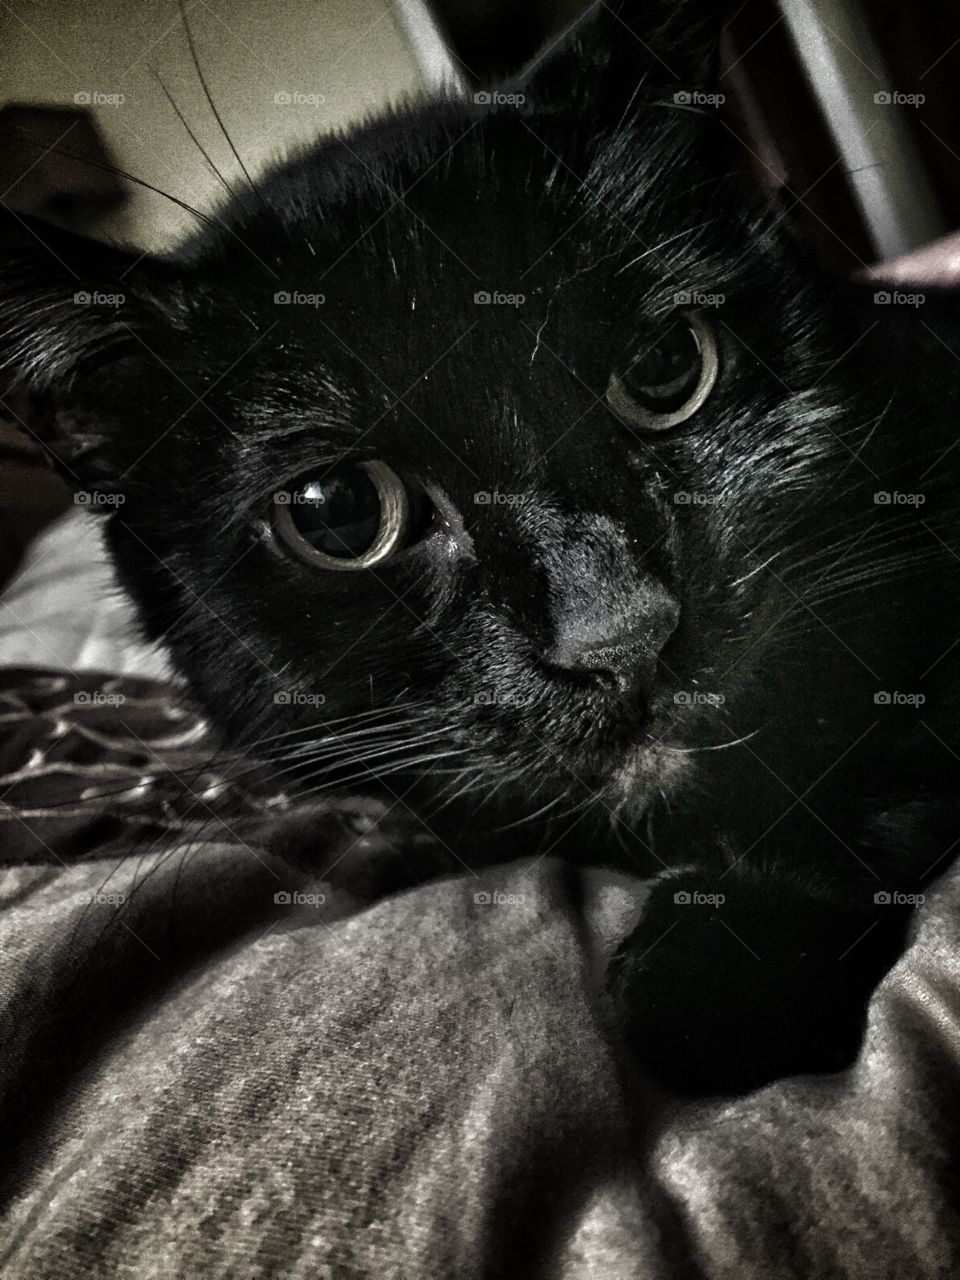 Slayer . Black cat 